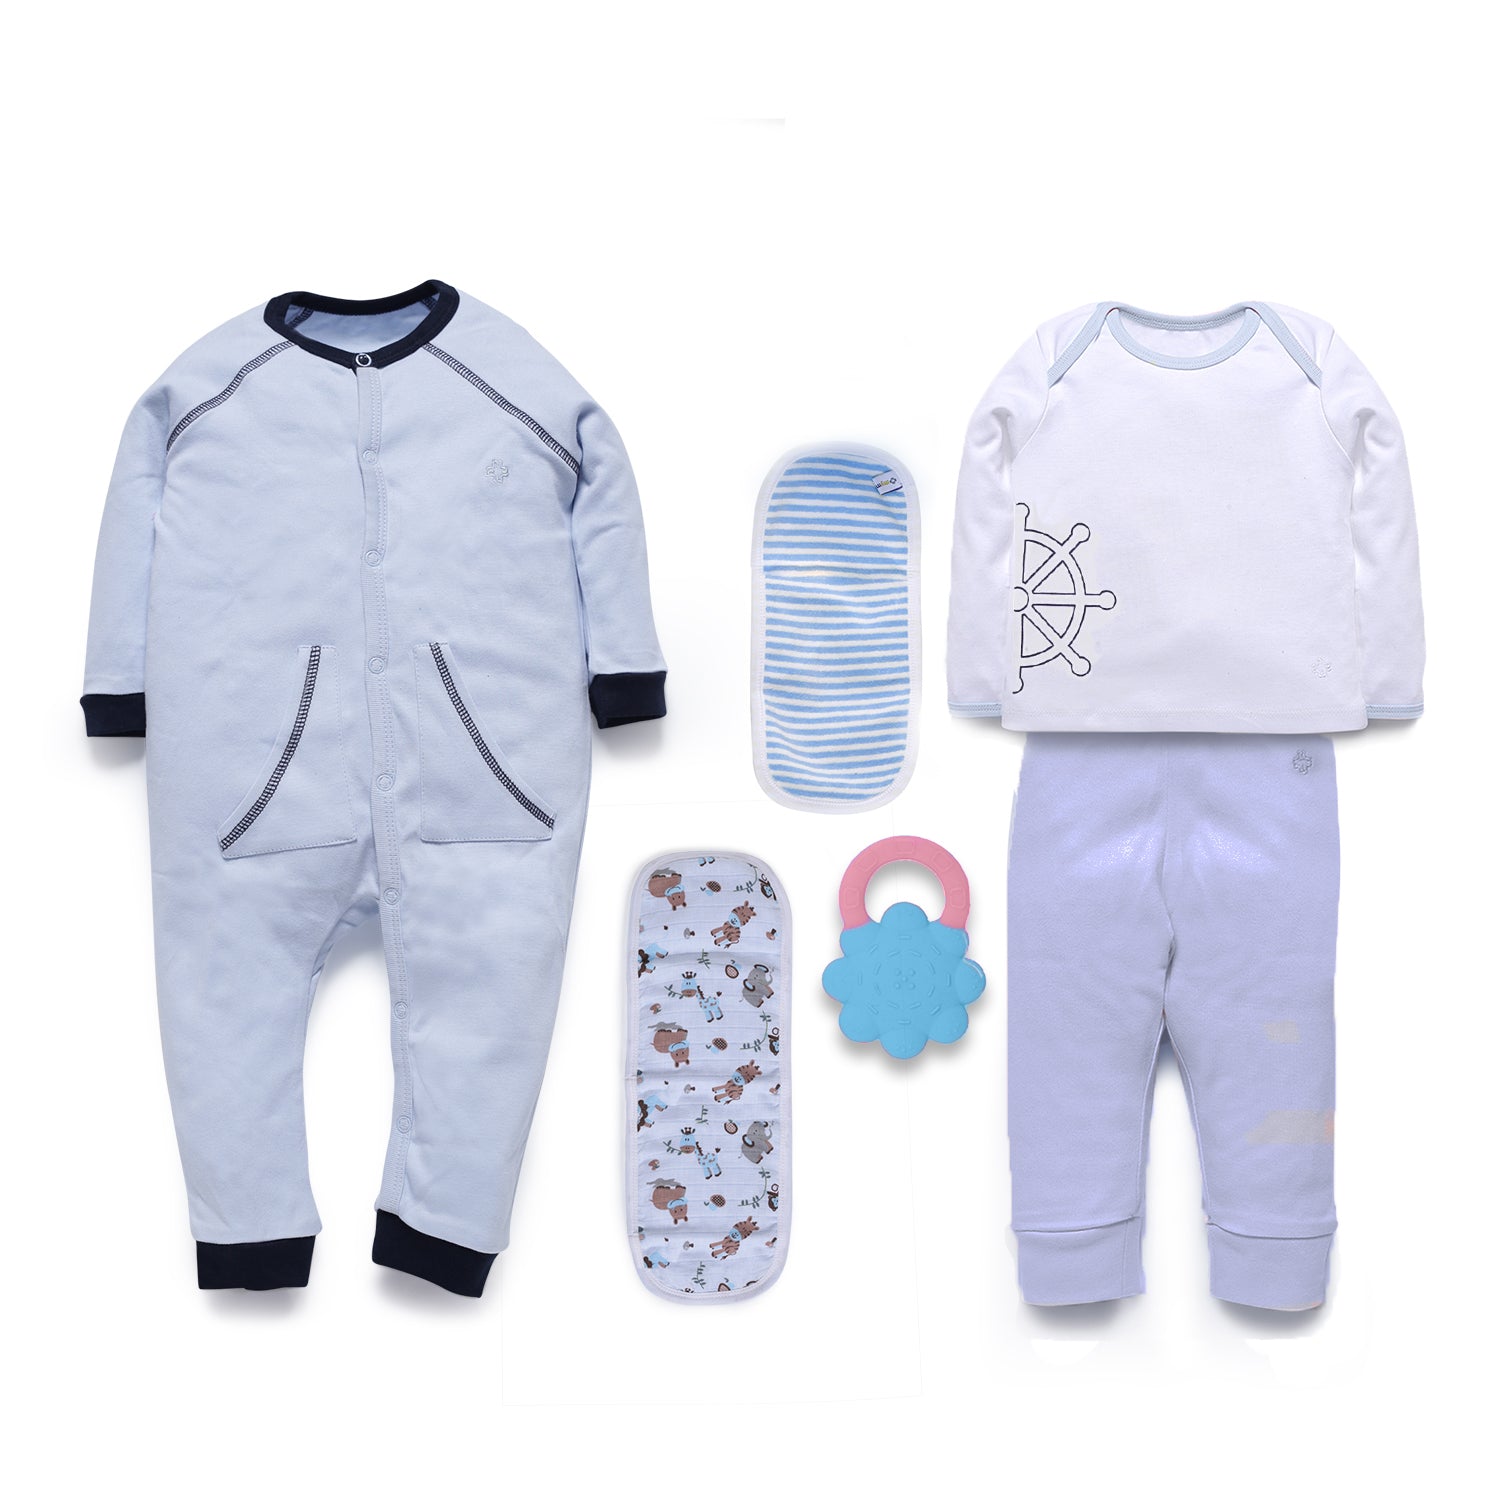 My Milestones Love Bundle Infant Gift Set B - 6 pcs - Blue